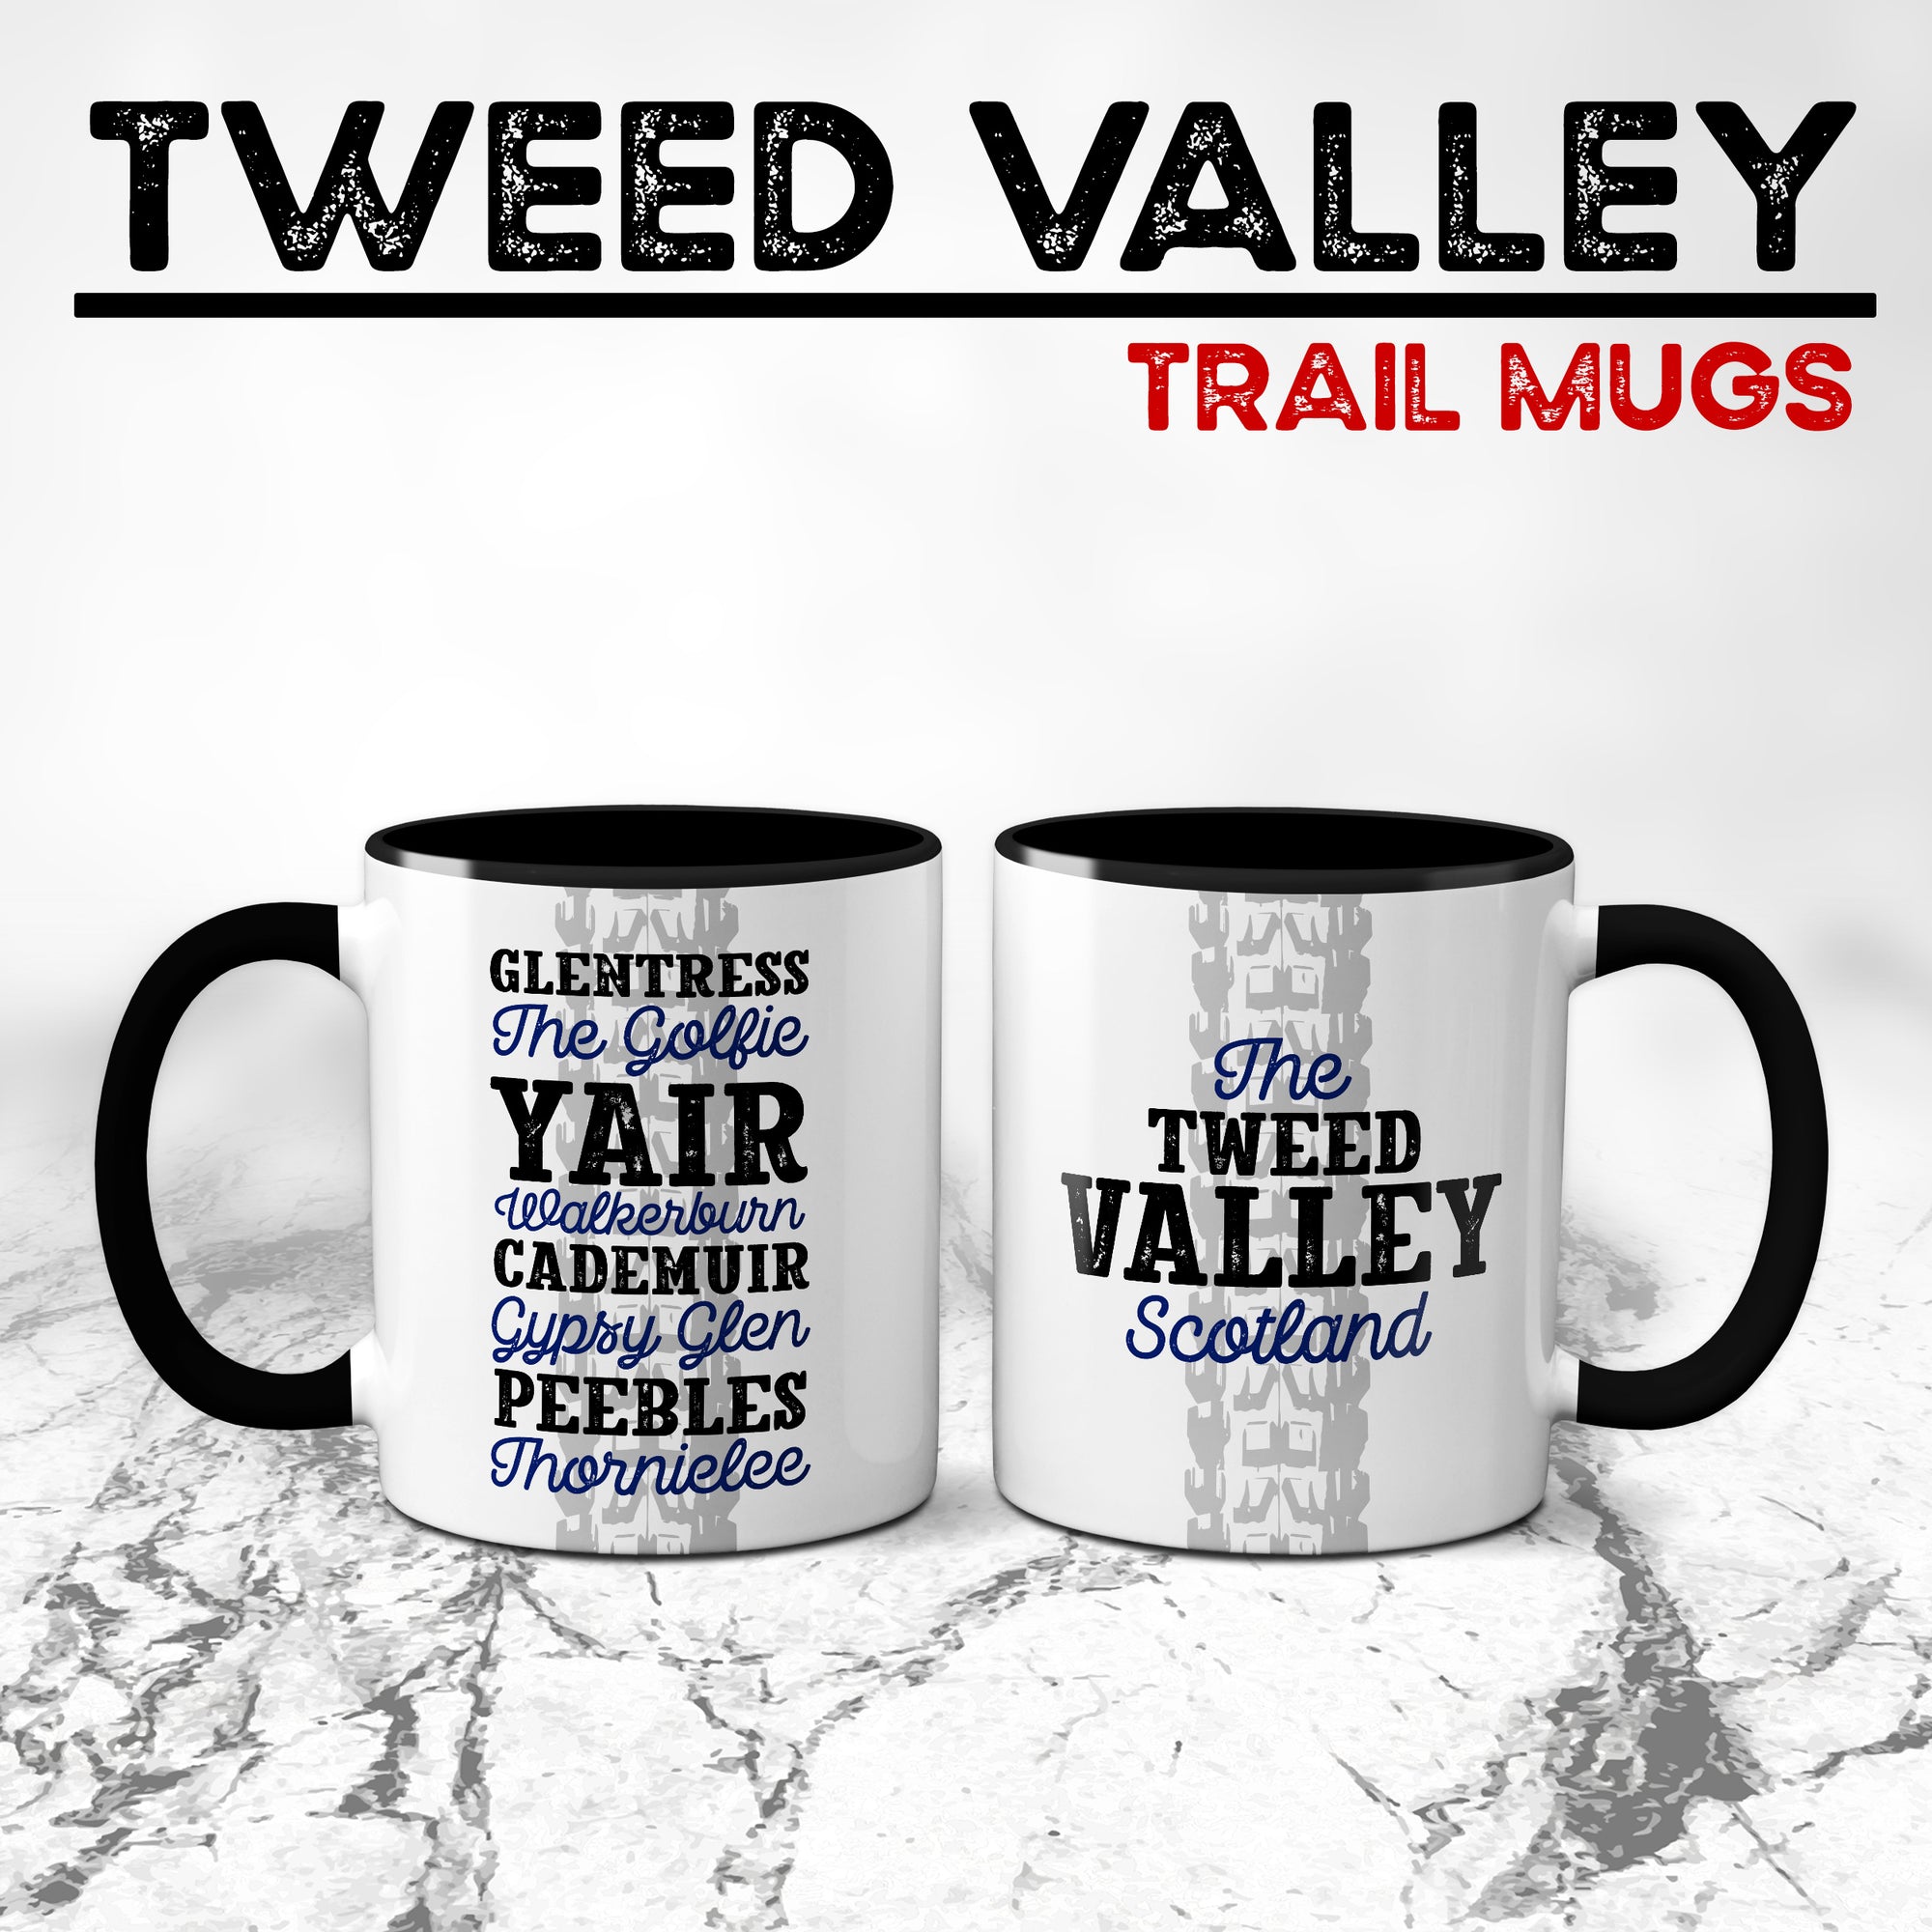 The Tweed Valley Mountain Bike Trail Mug